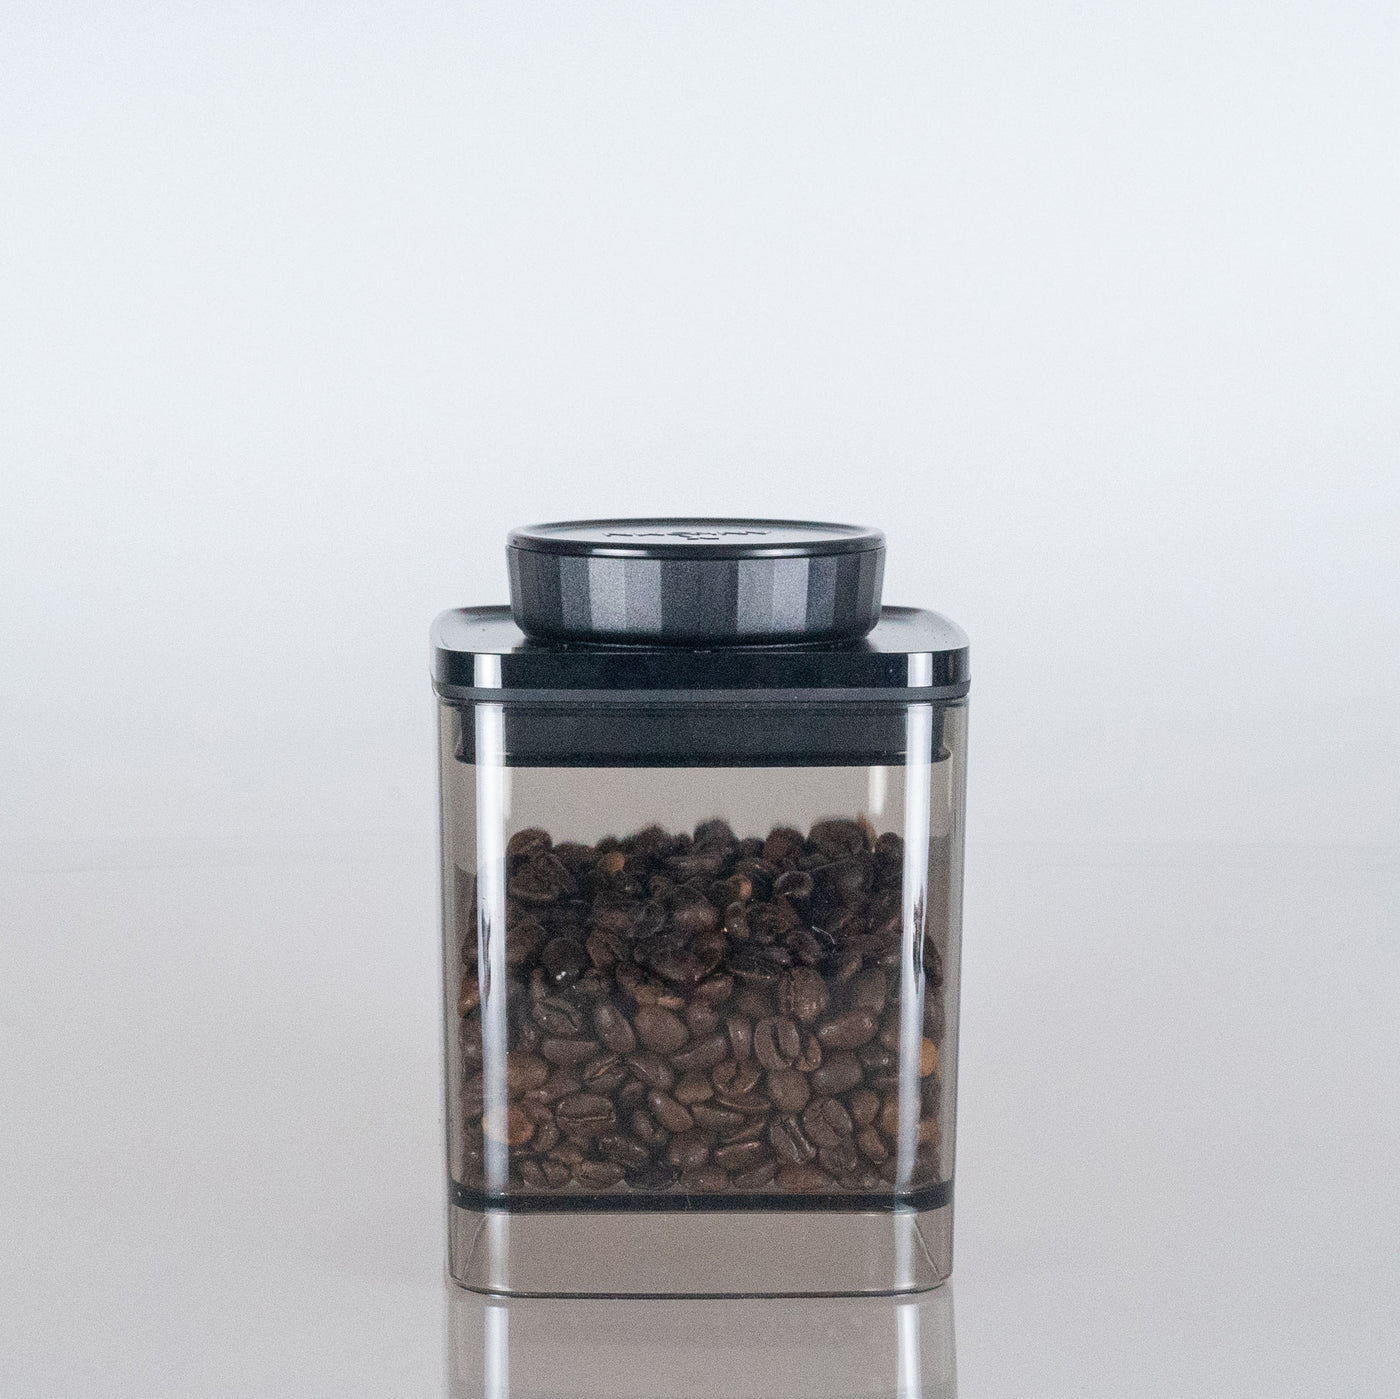 8oz/230g  Coffee Bean - Turn-N-Seal vacuum storage container 0.6L